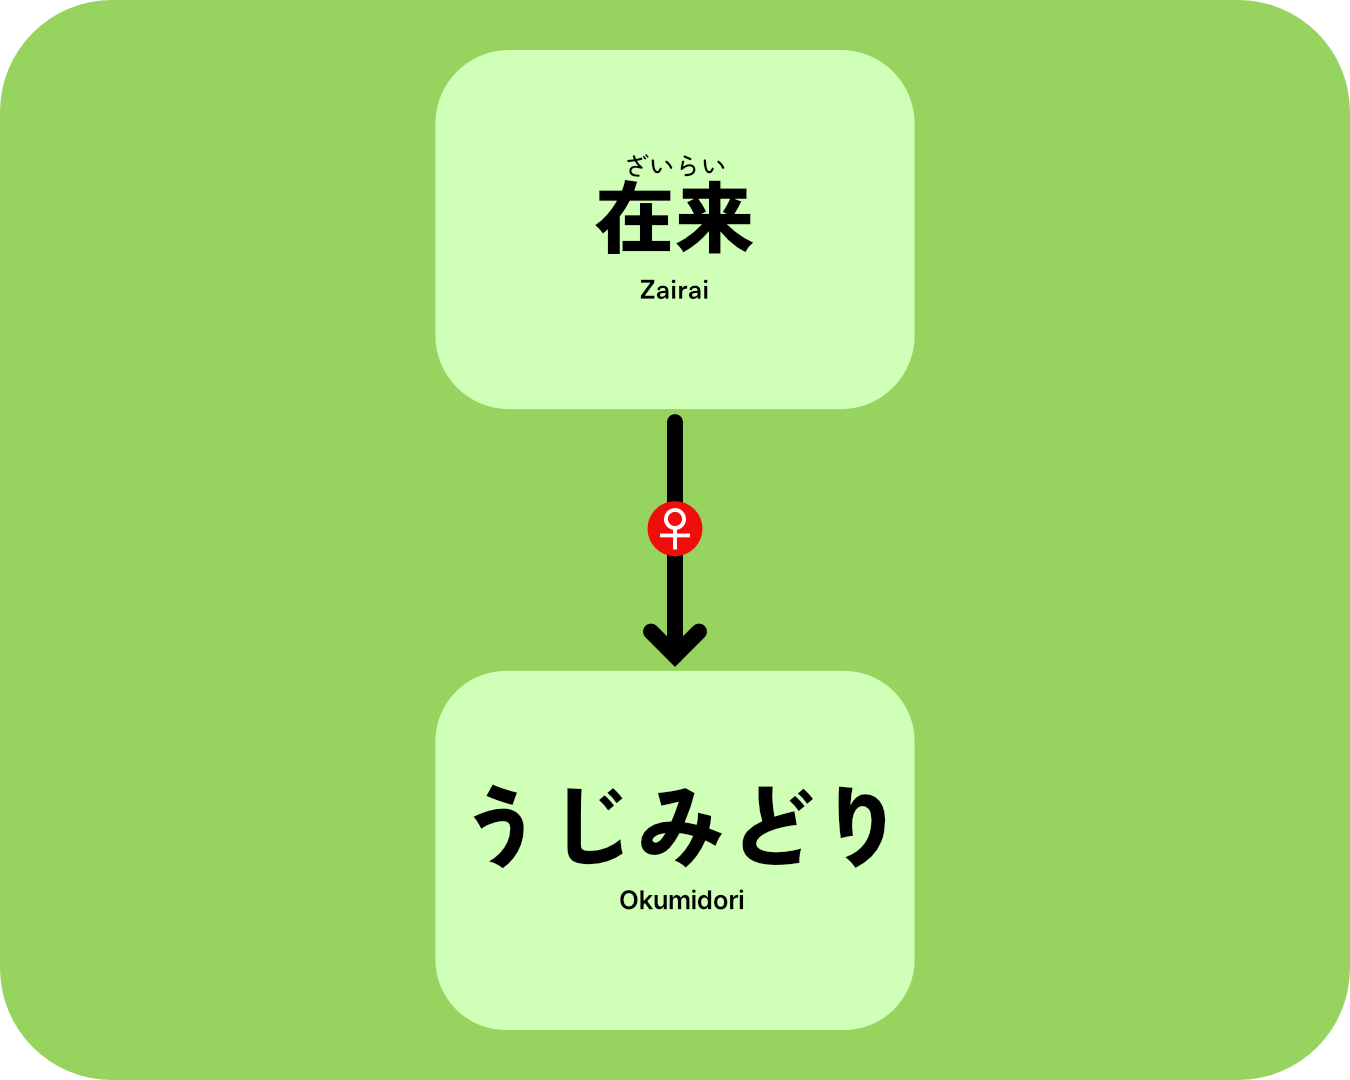 Genealogy tree of the Ujimidori cultivar